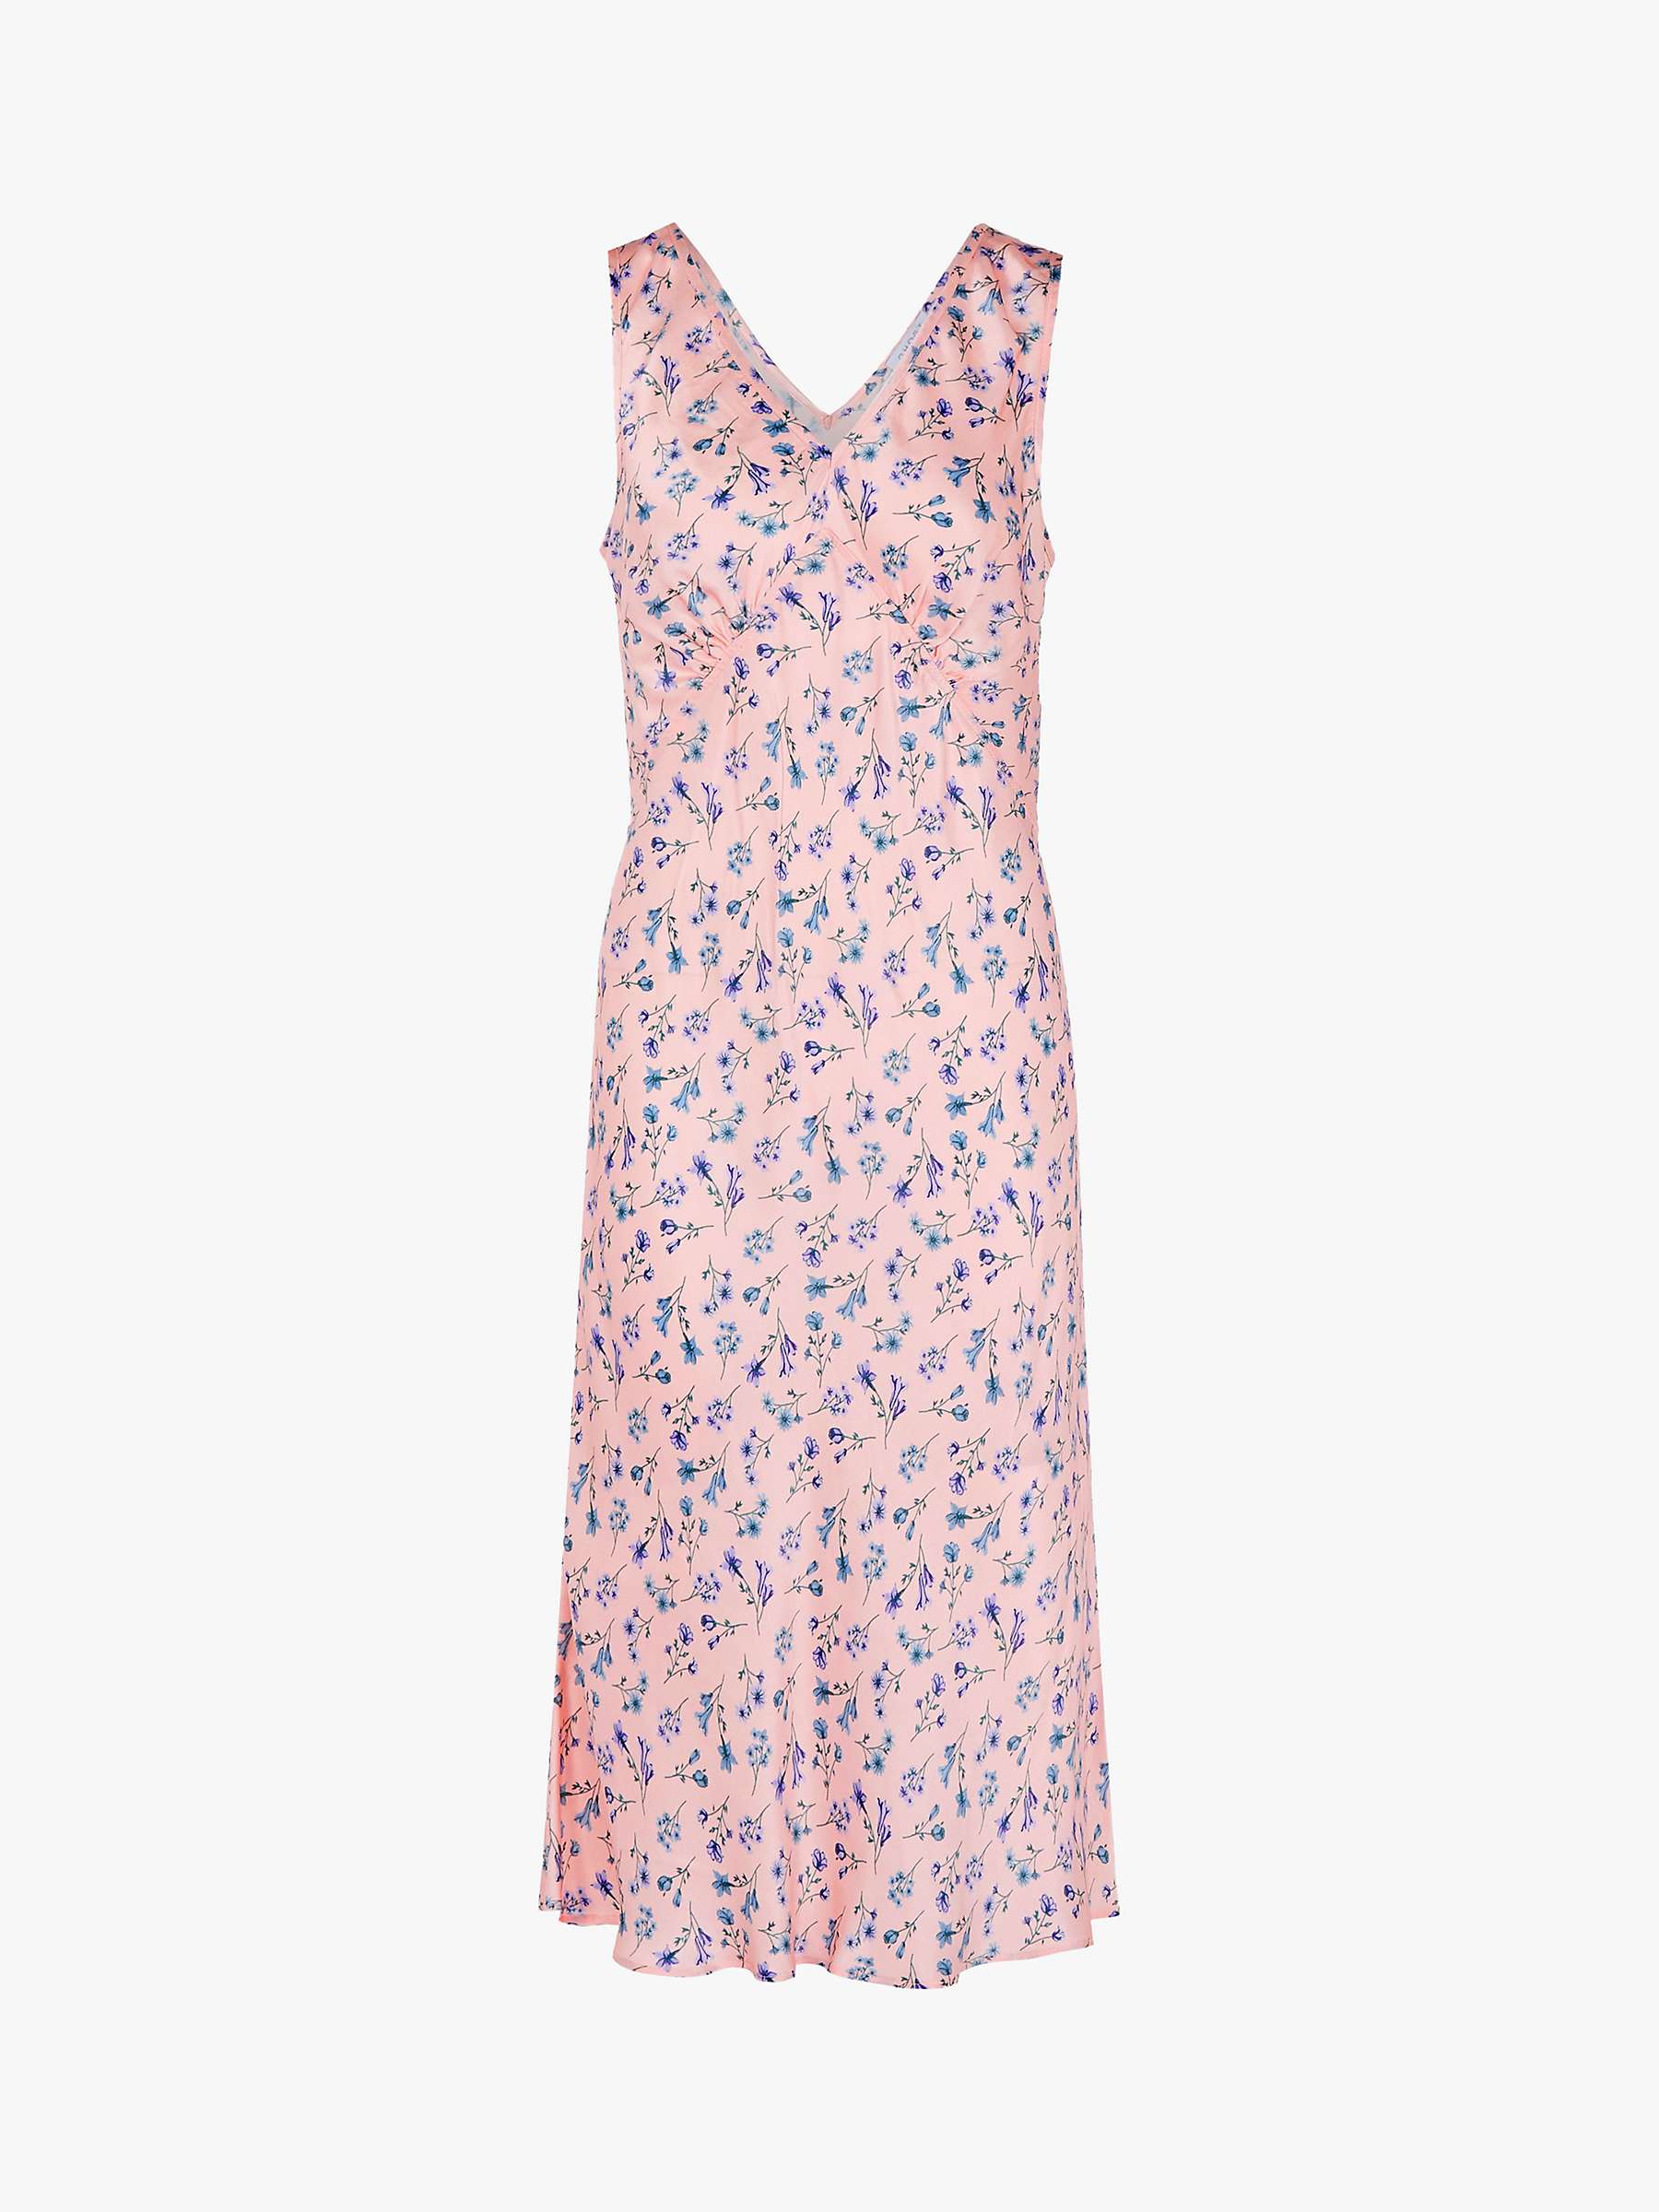 Ghost Ditsy Floral Print Midi Summer Dress, Pink at John Lewis & Partners